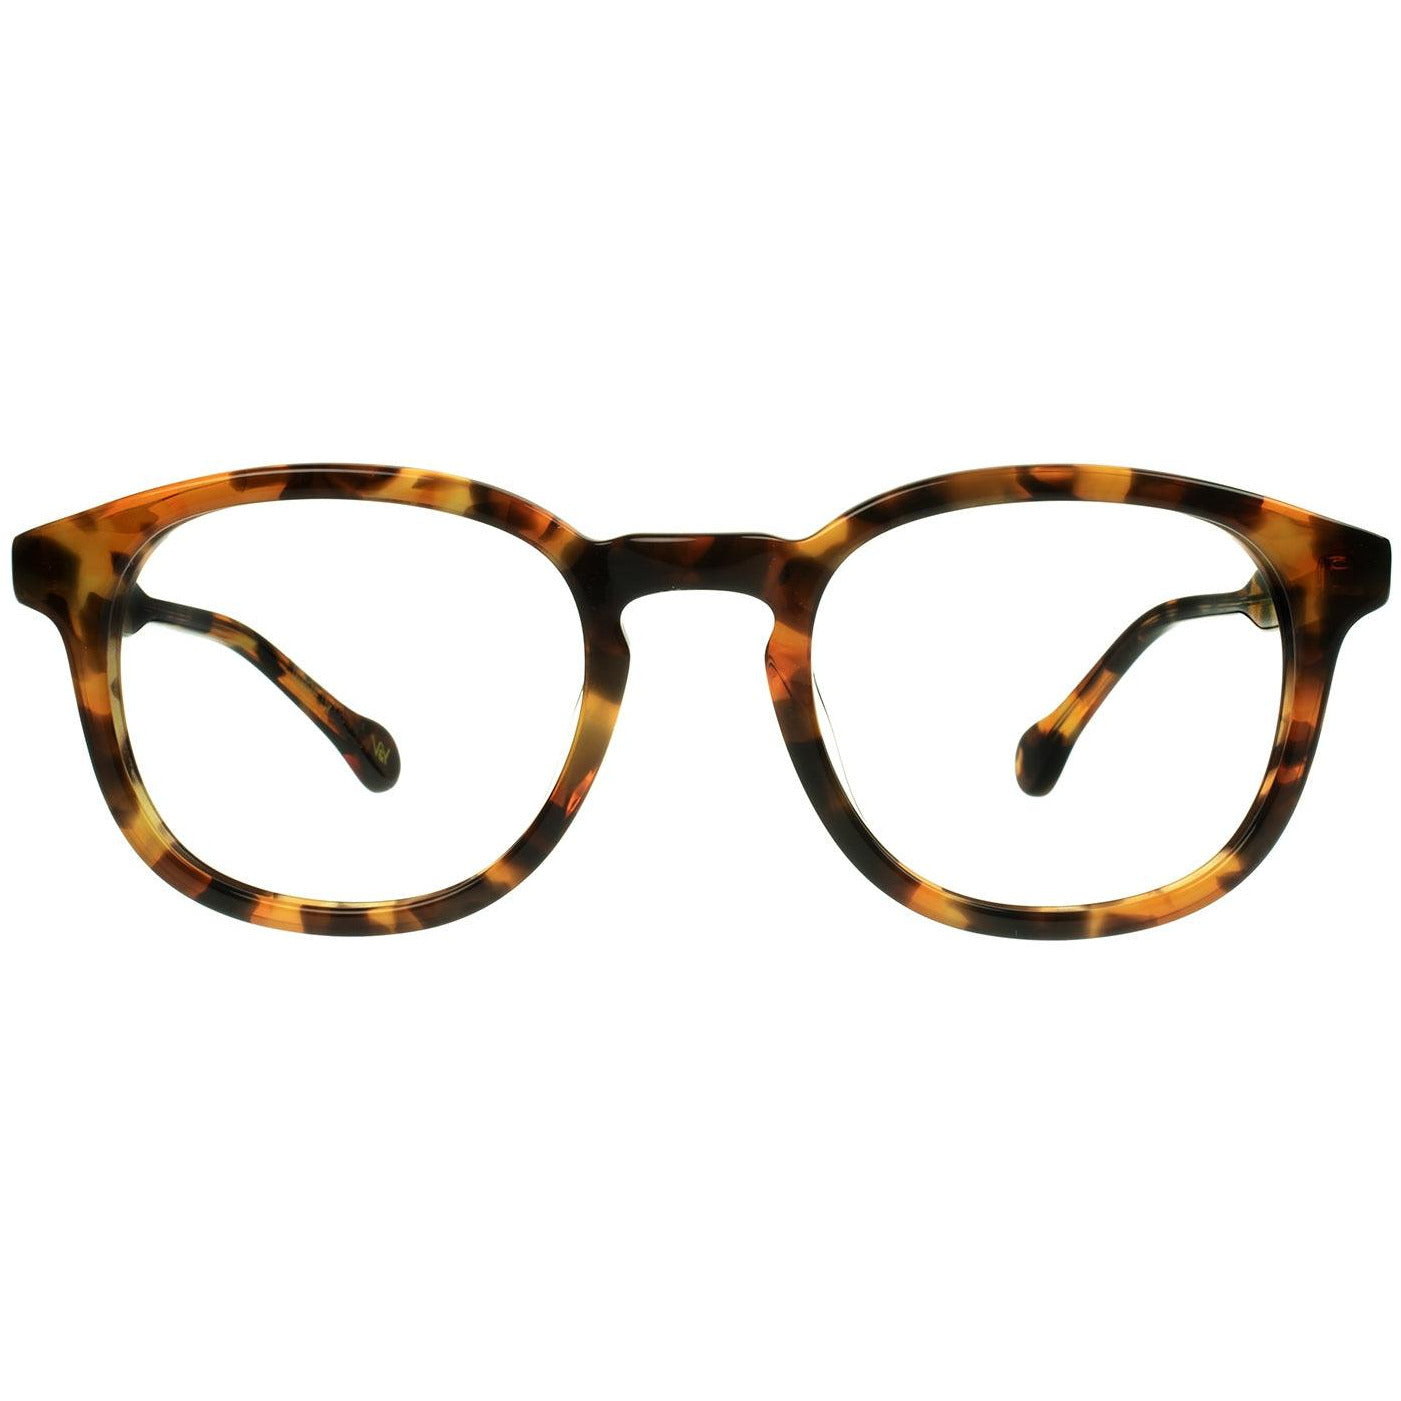 Sharp Eyeglasses | Vint and York